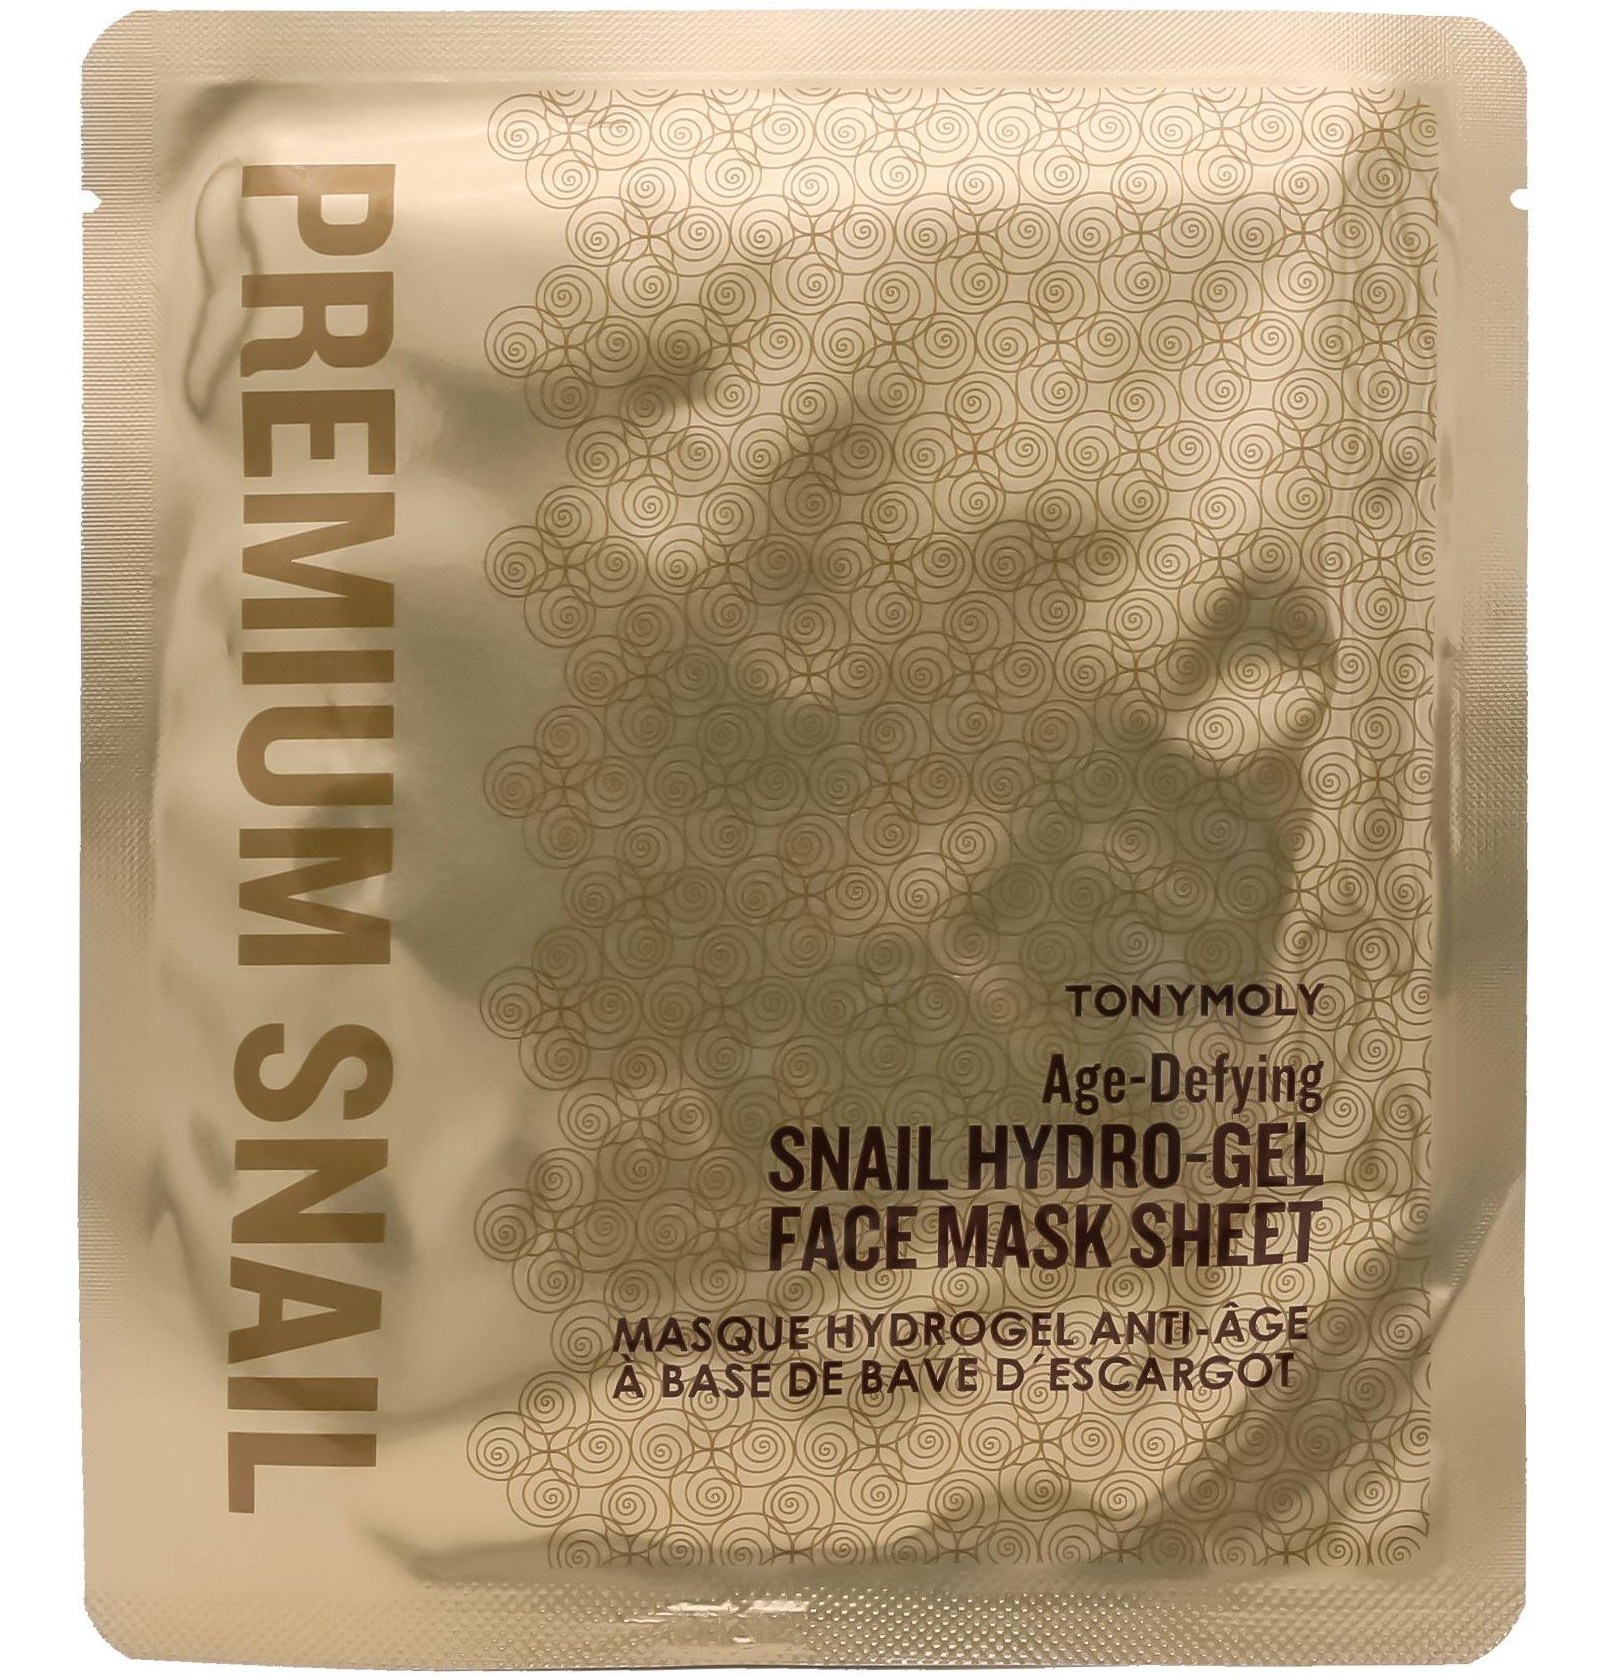 TonyMoly Age-defying Snail Hydro-gel Face Sheet Mask